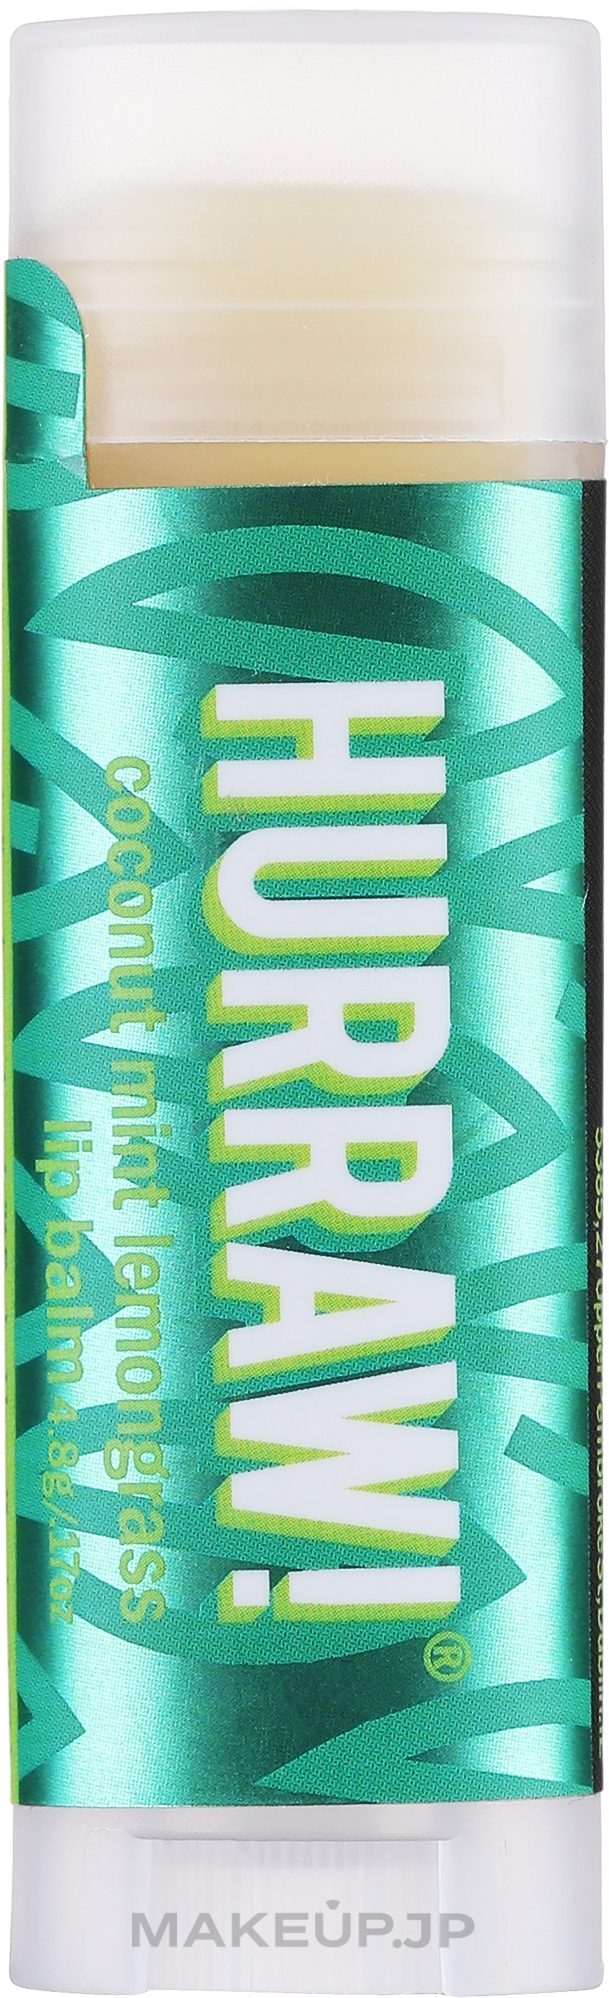 Pitta Lip Balm - Hurraw! Pitta Lip Balm Limited Edition — photo 4.8 g